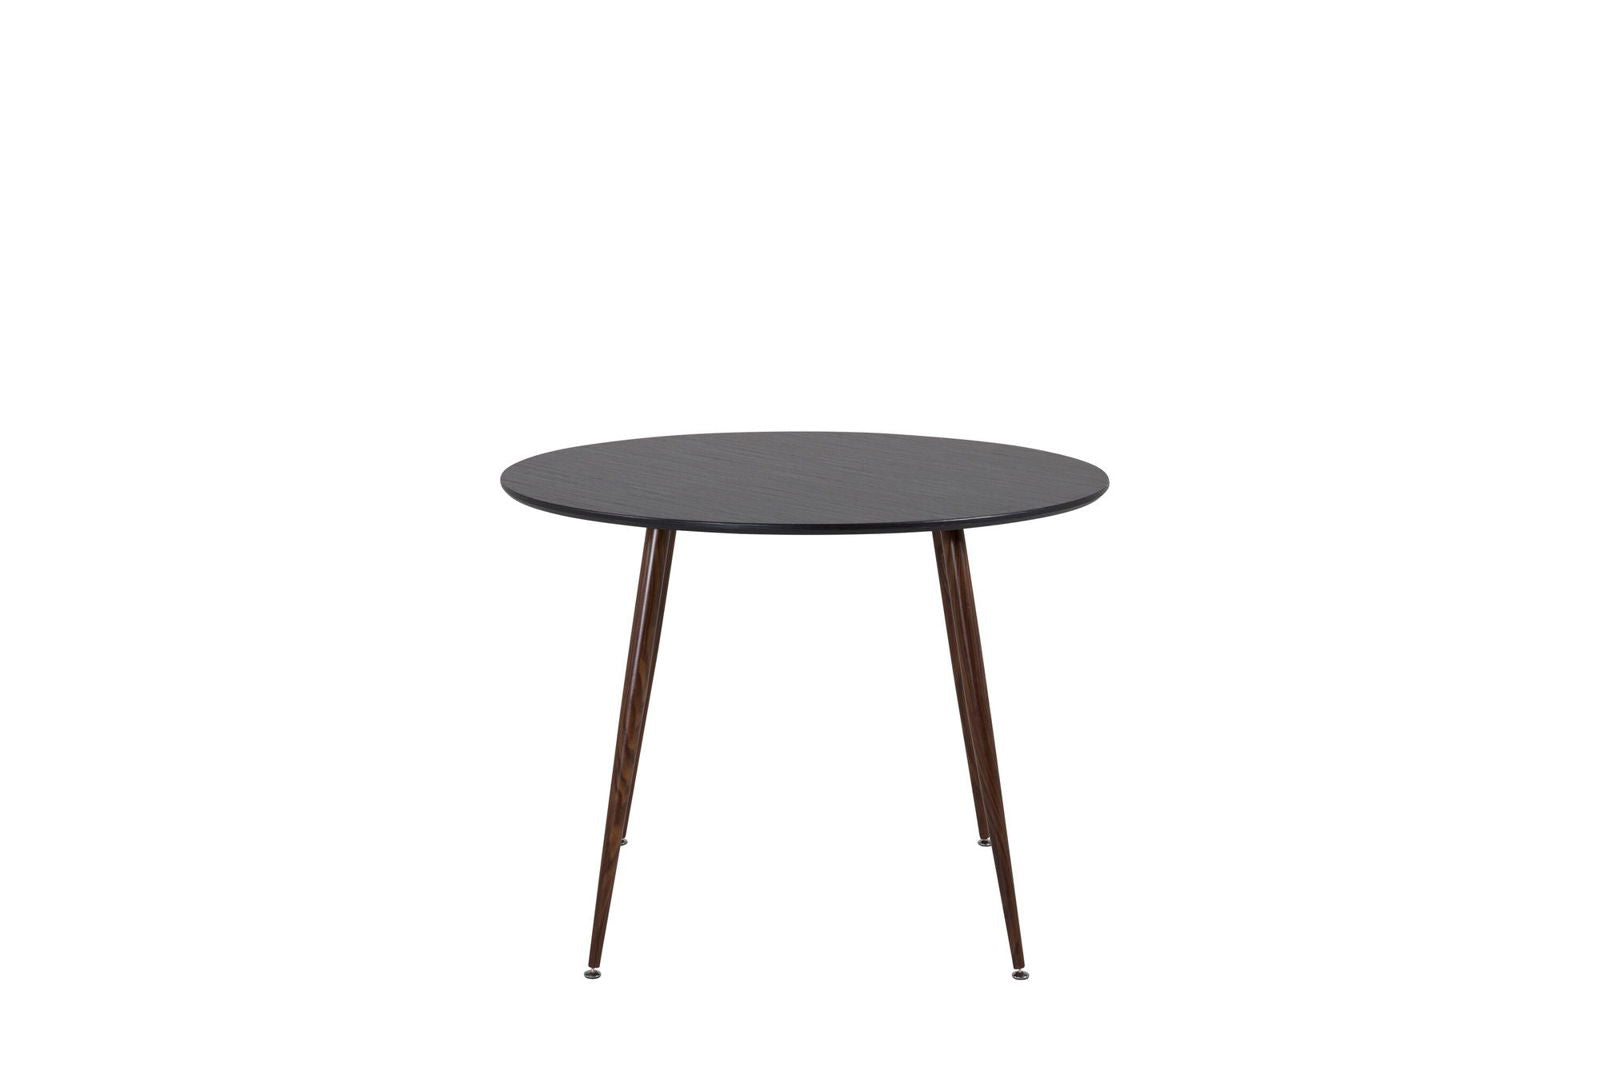 Venture Home Plaza Round Table 100 cm - Black Top - Walnut legs - vivahabitat.com